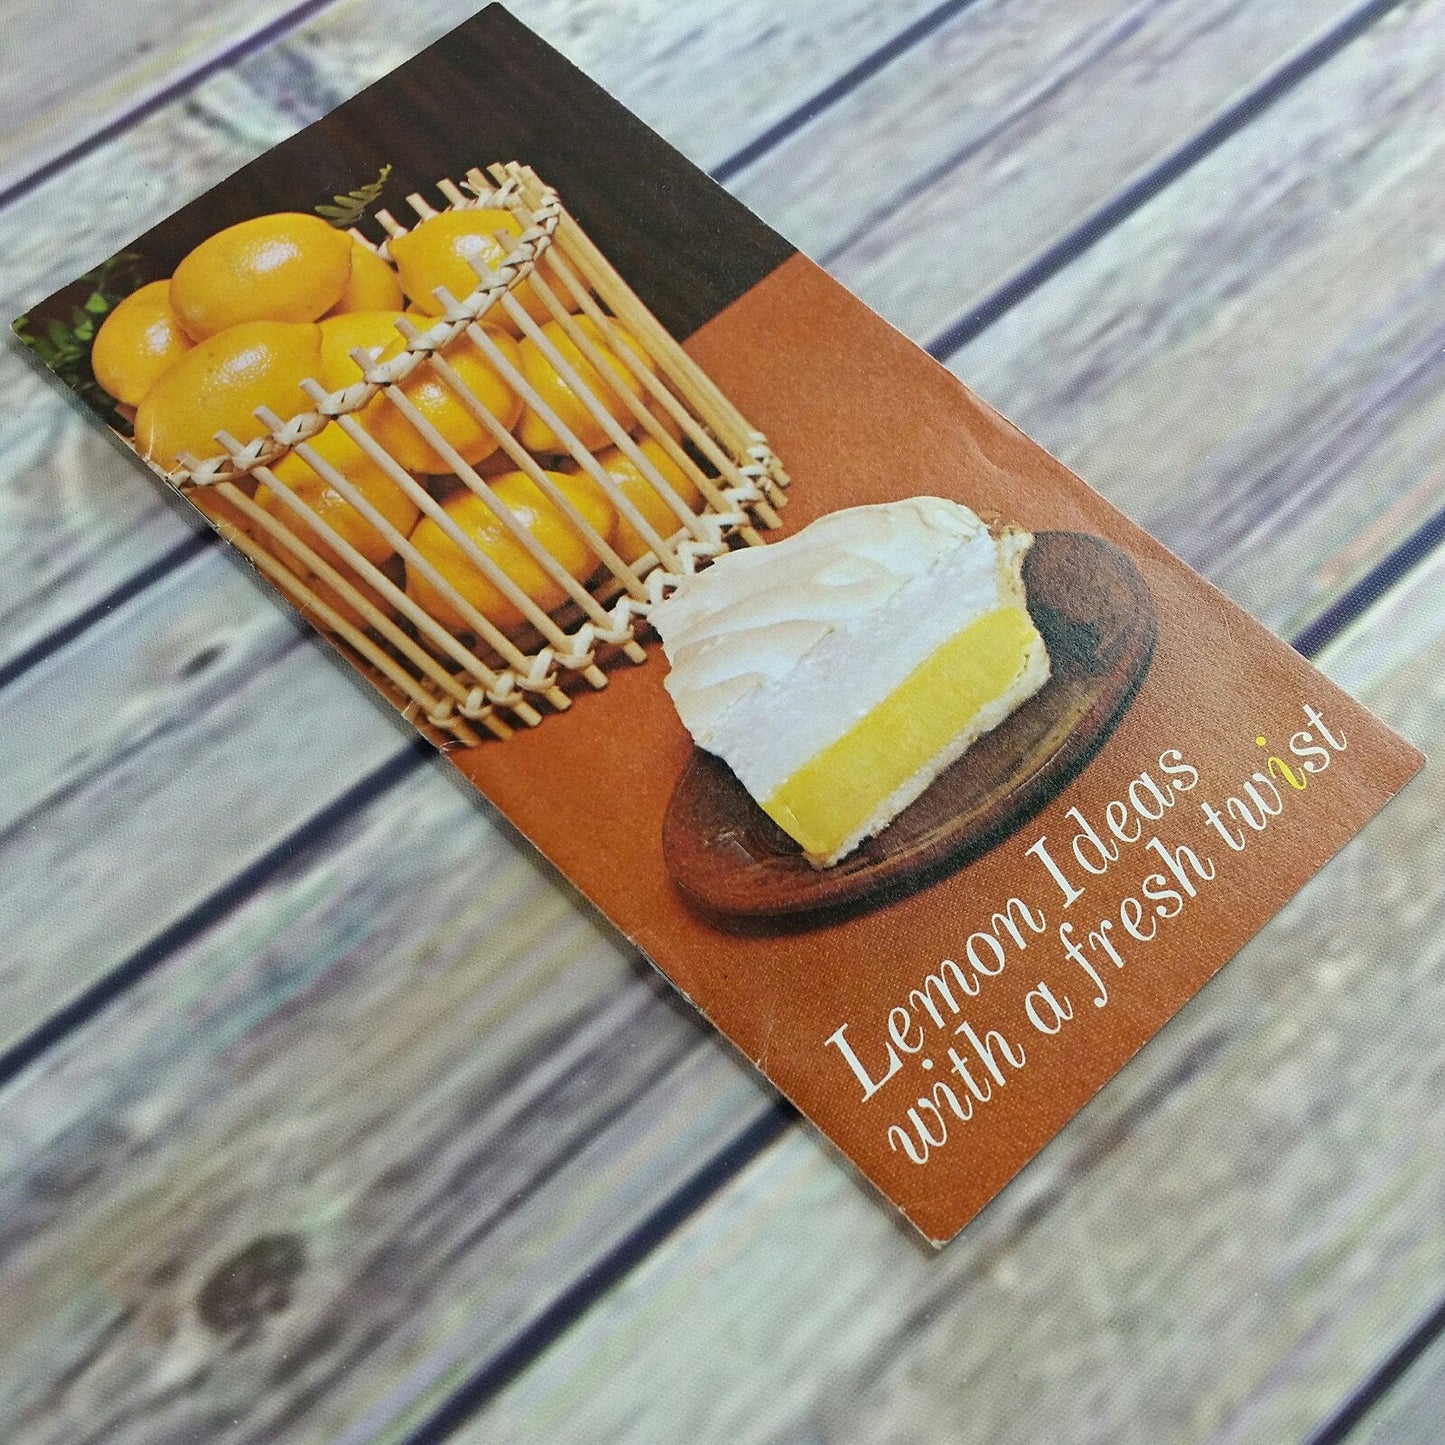 Vintage Cookbook Sunkist Lemons Cookbook Lemon Recipes 1975 Paperback Promo Booklet Lemon Ideas With a Fresh Twist